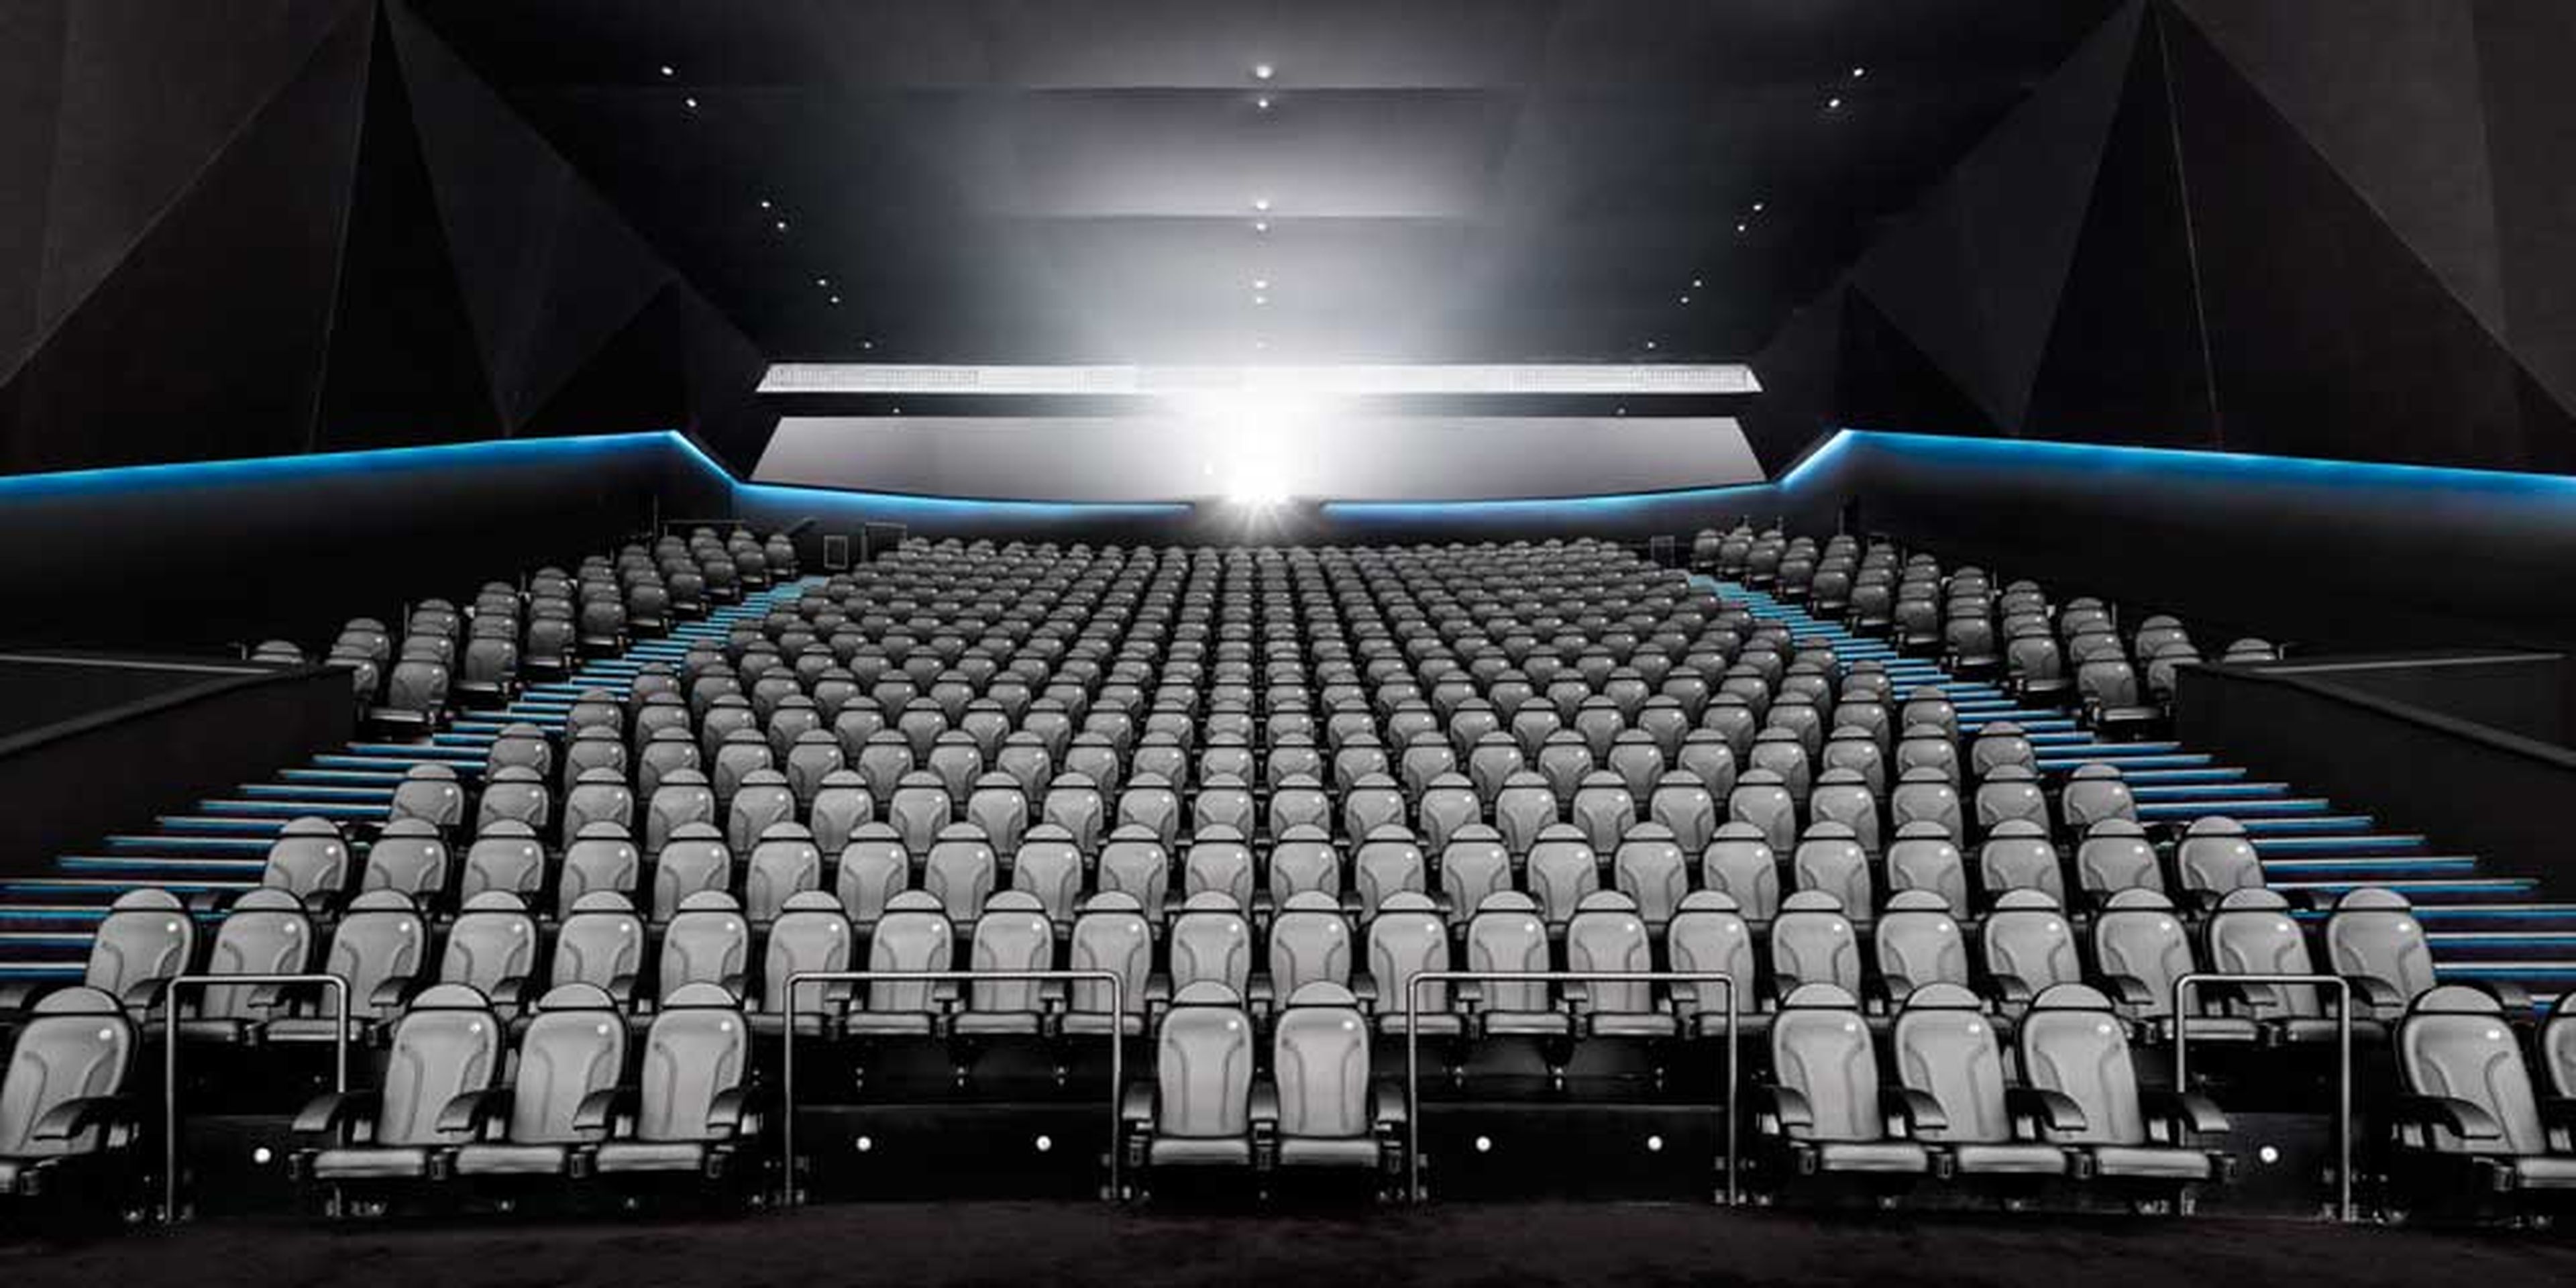 Sala Dolby Cinema Cinesa La Maquinista